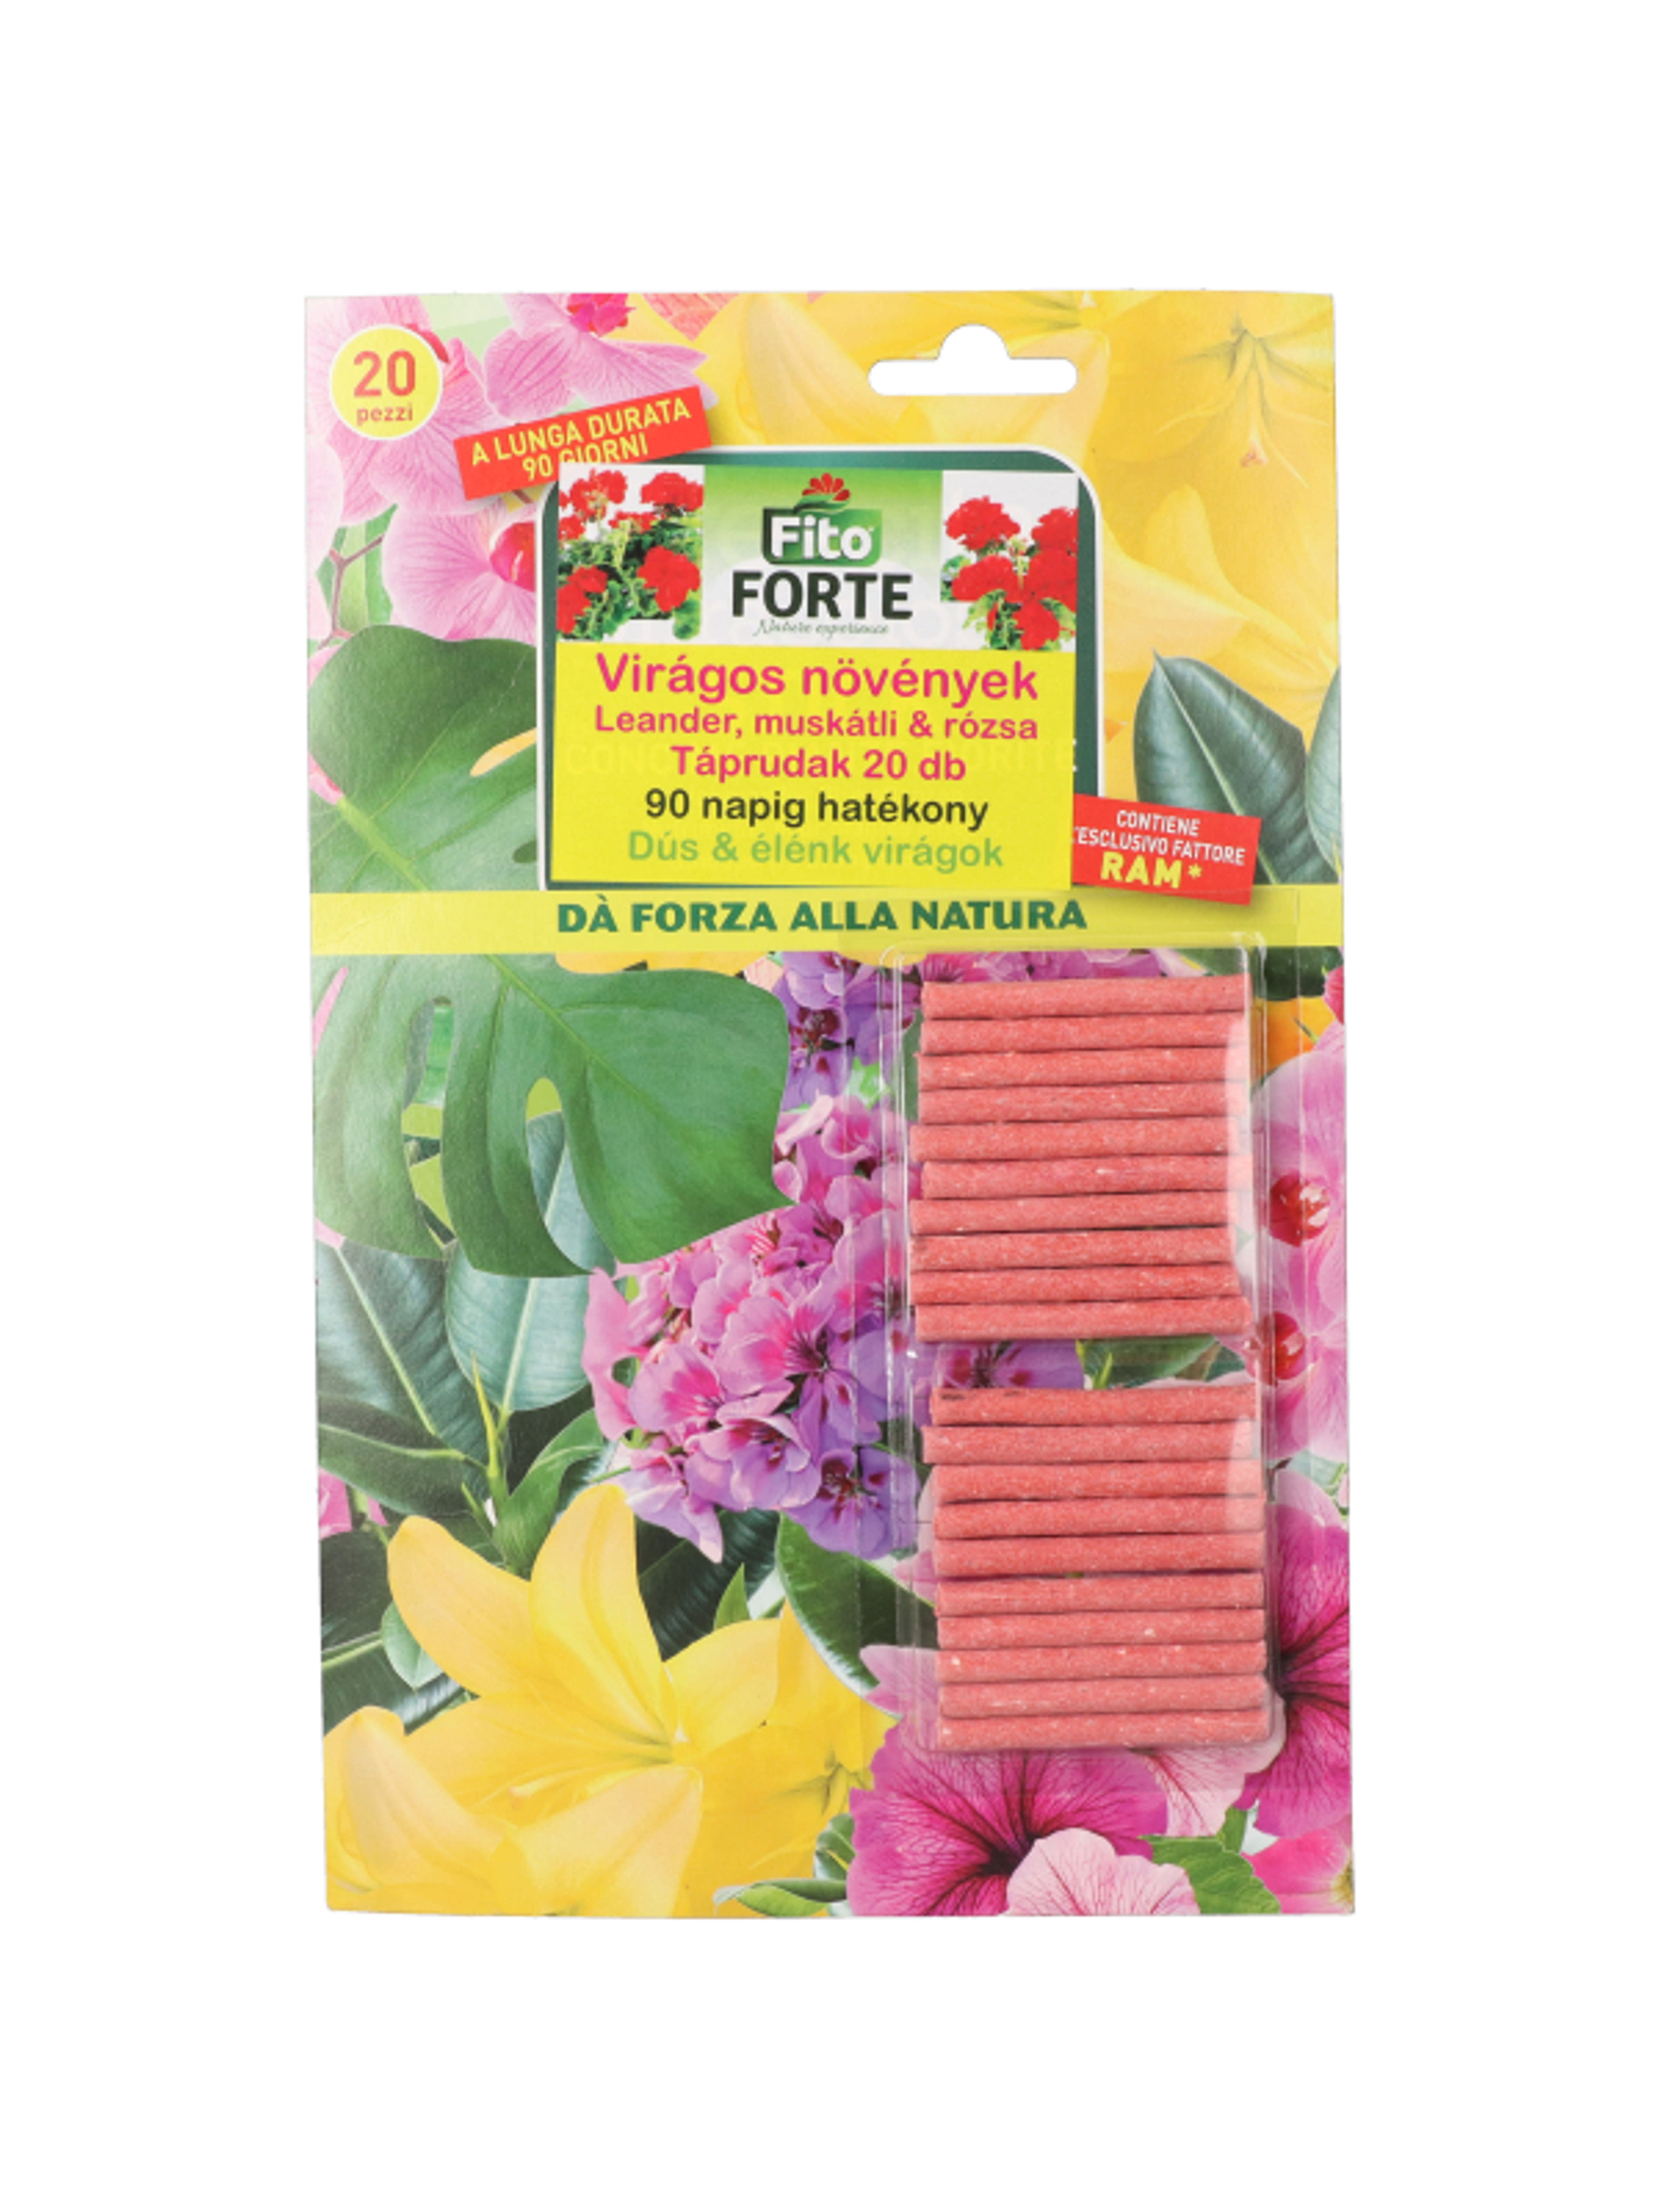 Fito Forte virágos növényekhez táprúd - 20 db